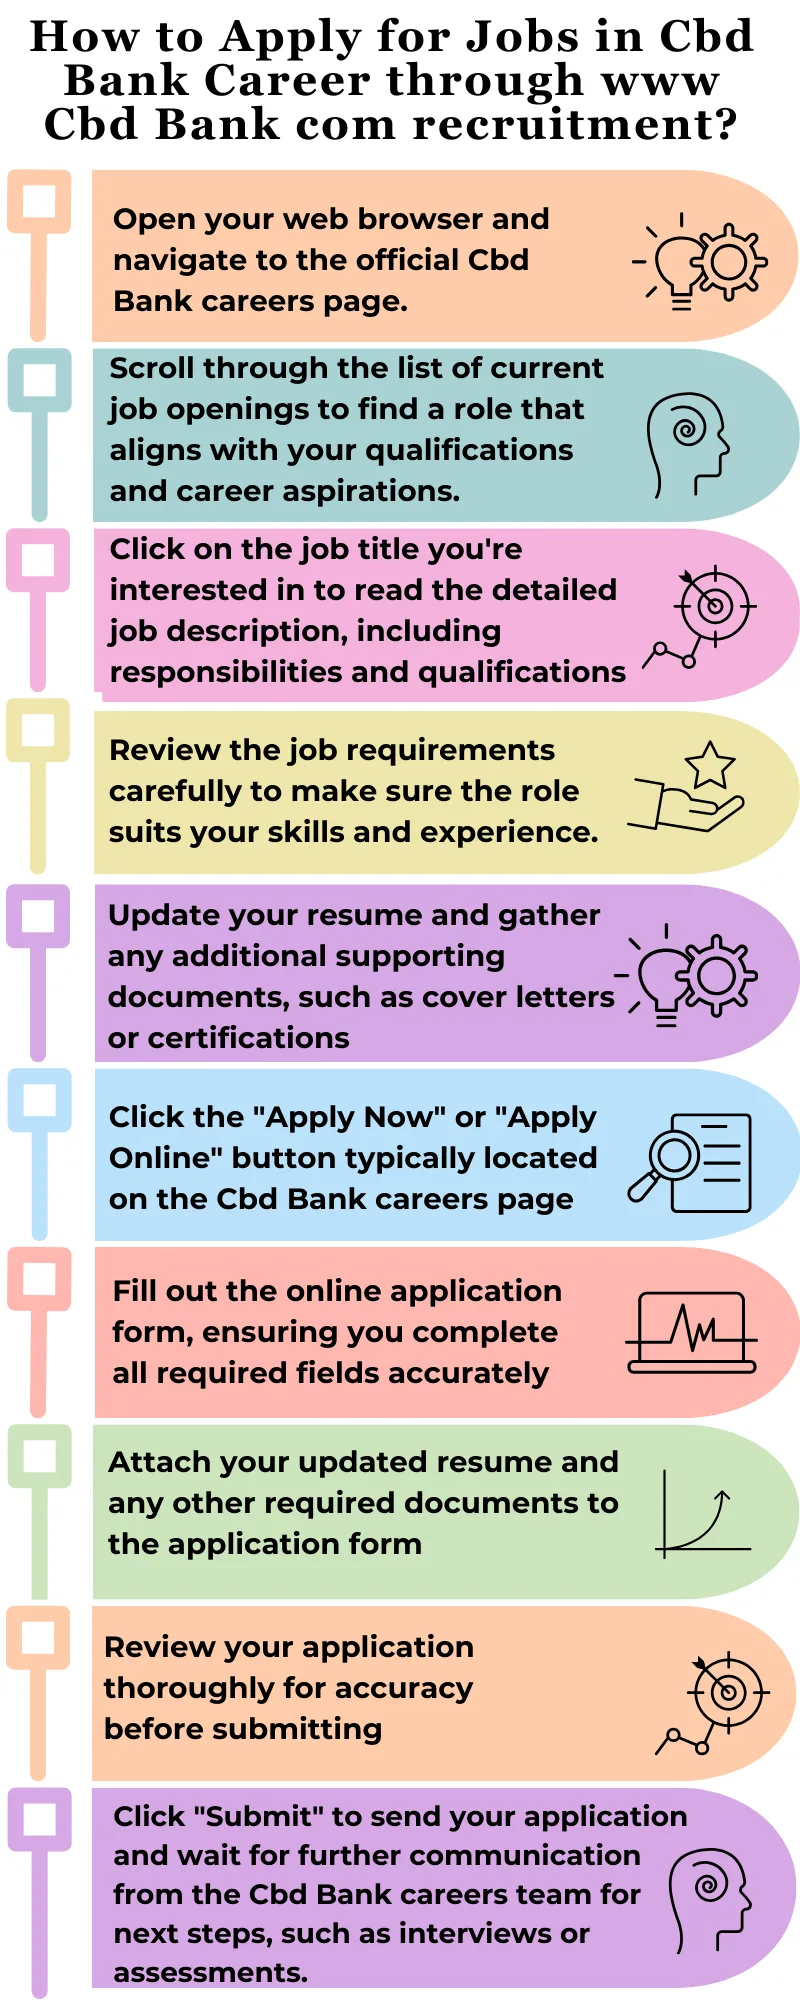 How to Apply for Jobs in Cbd Bank Career through www Cbd Bank com recruitment?